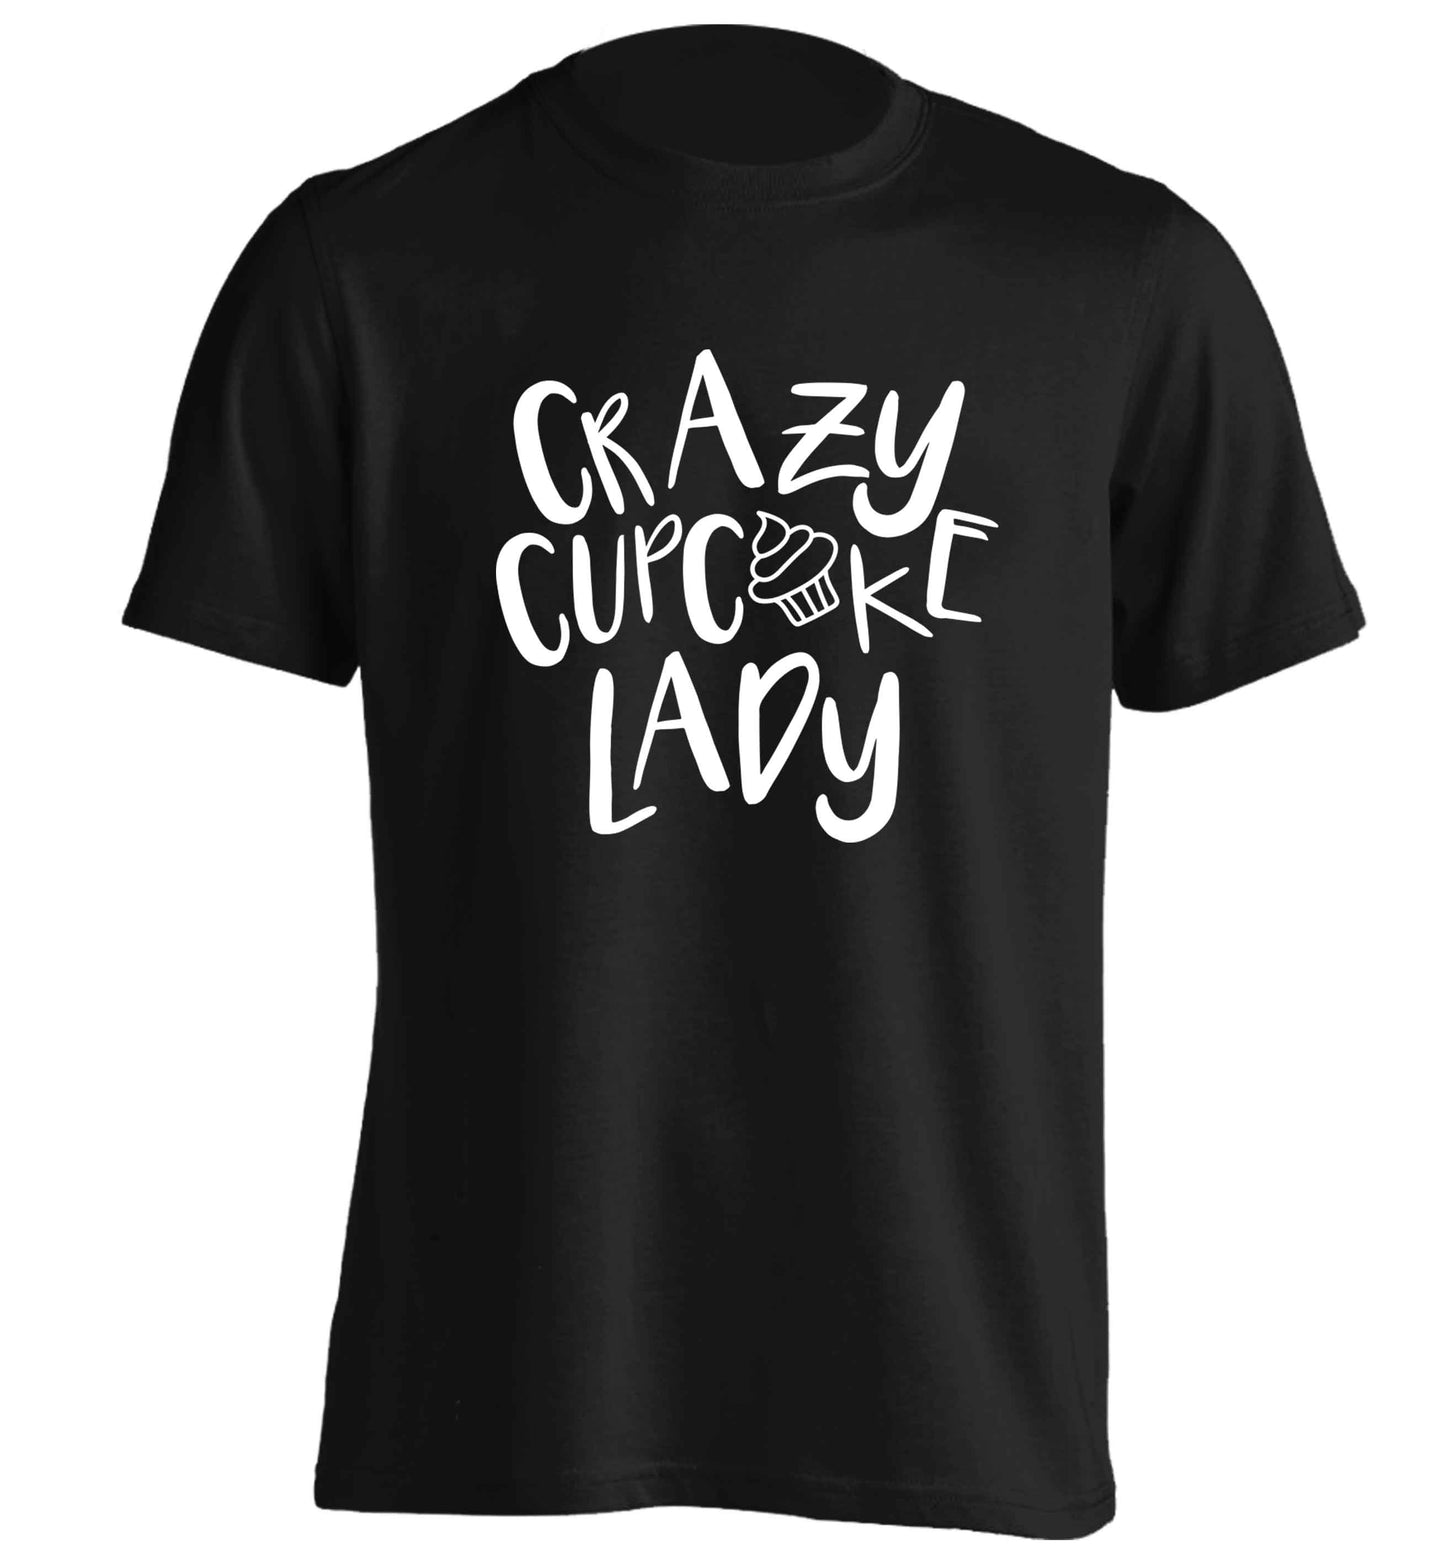 Crazy cupcake lady adults unisex black Tshirt 2XL